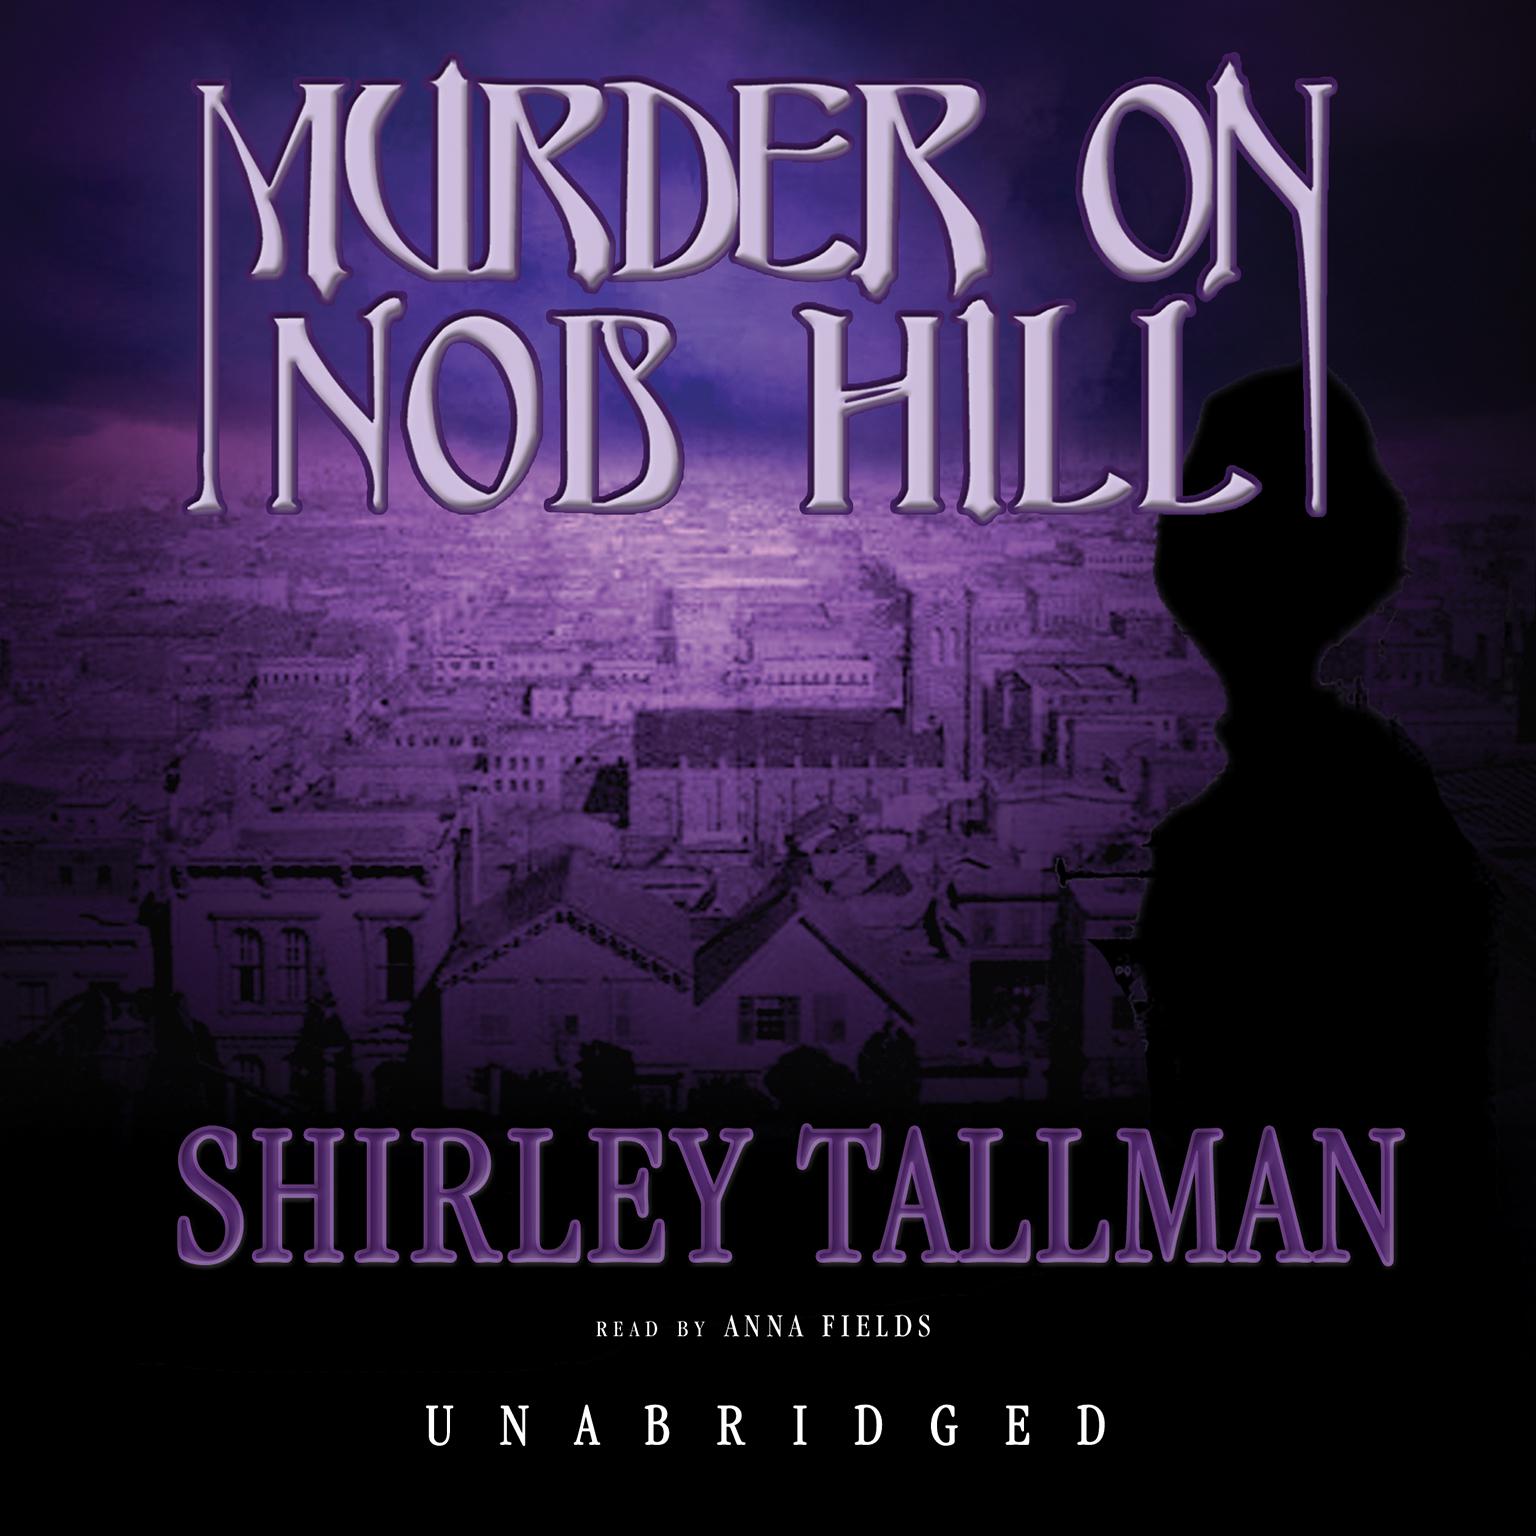 Murder on Nob Hill Audiobook, by Shirley Tallman